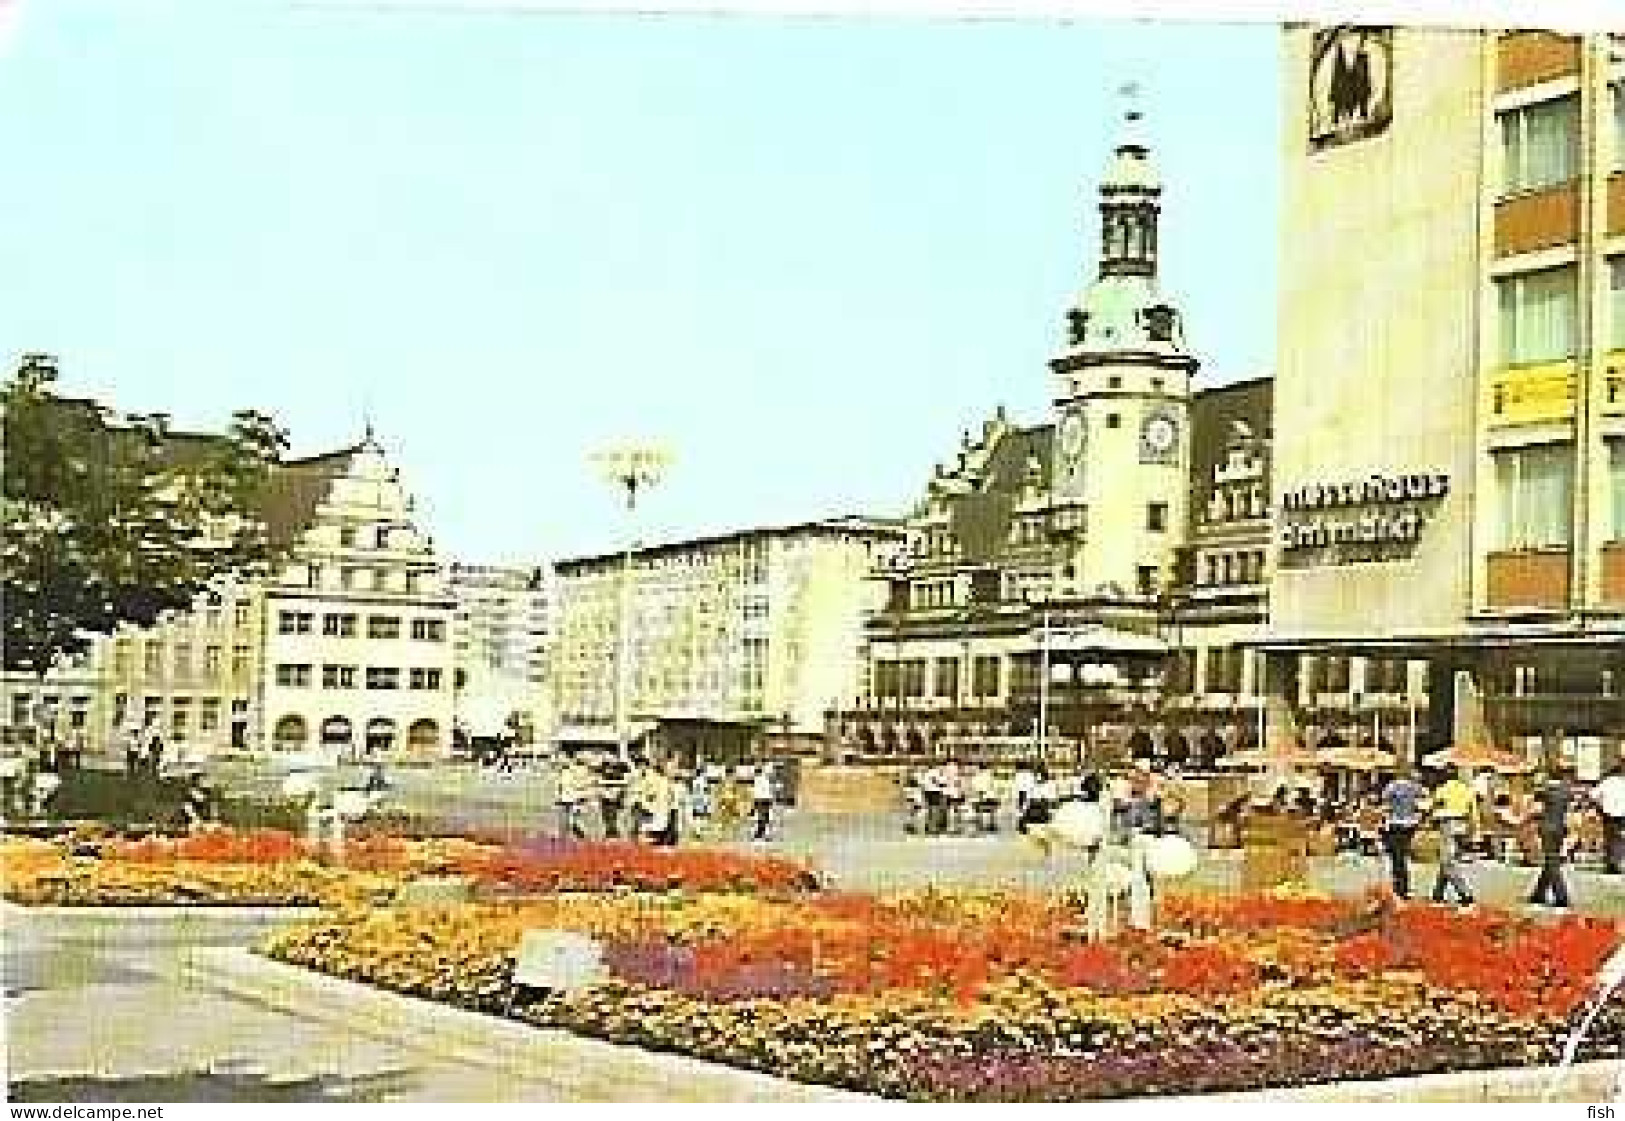 Germany  & Messesstadt Leipzig , Altes Rathaus Am Markt, Karl Marx Stad DDR To  Oeiras Portugal 1983 (7776) - Märkte